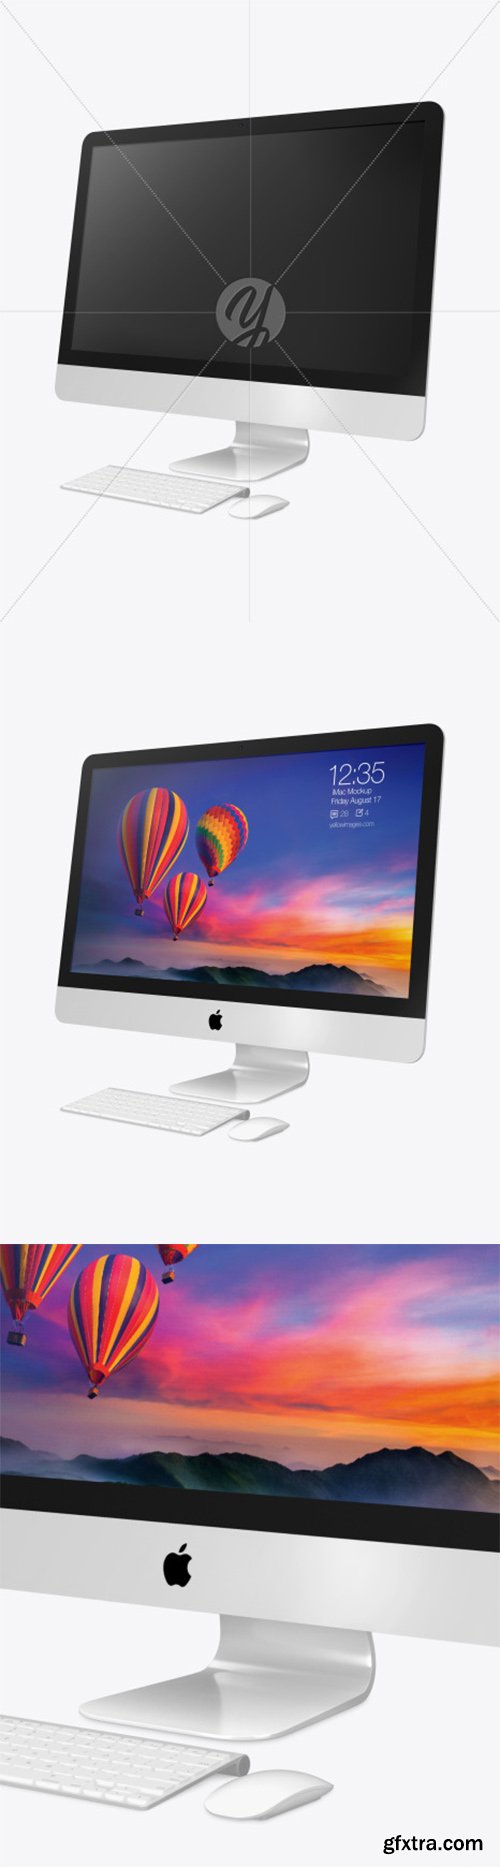 iMac Pro Mockup - Right Side View 60939